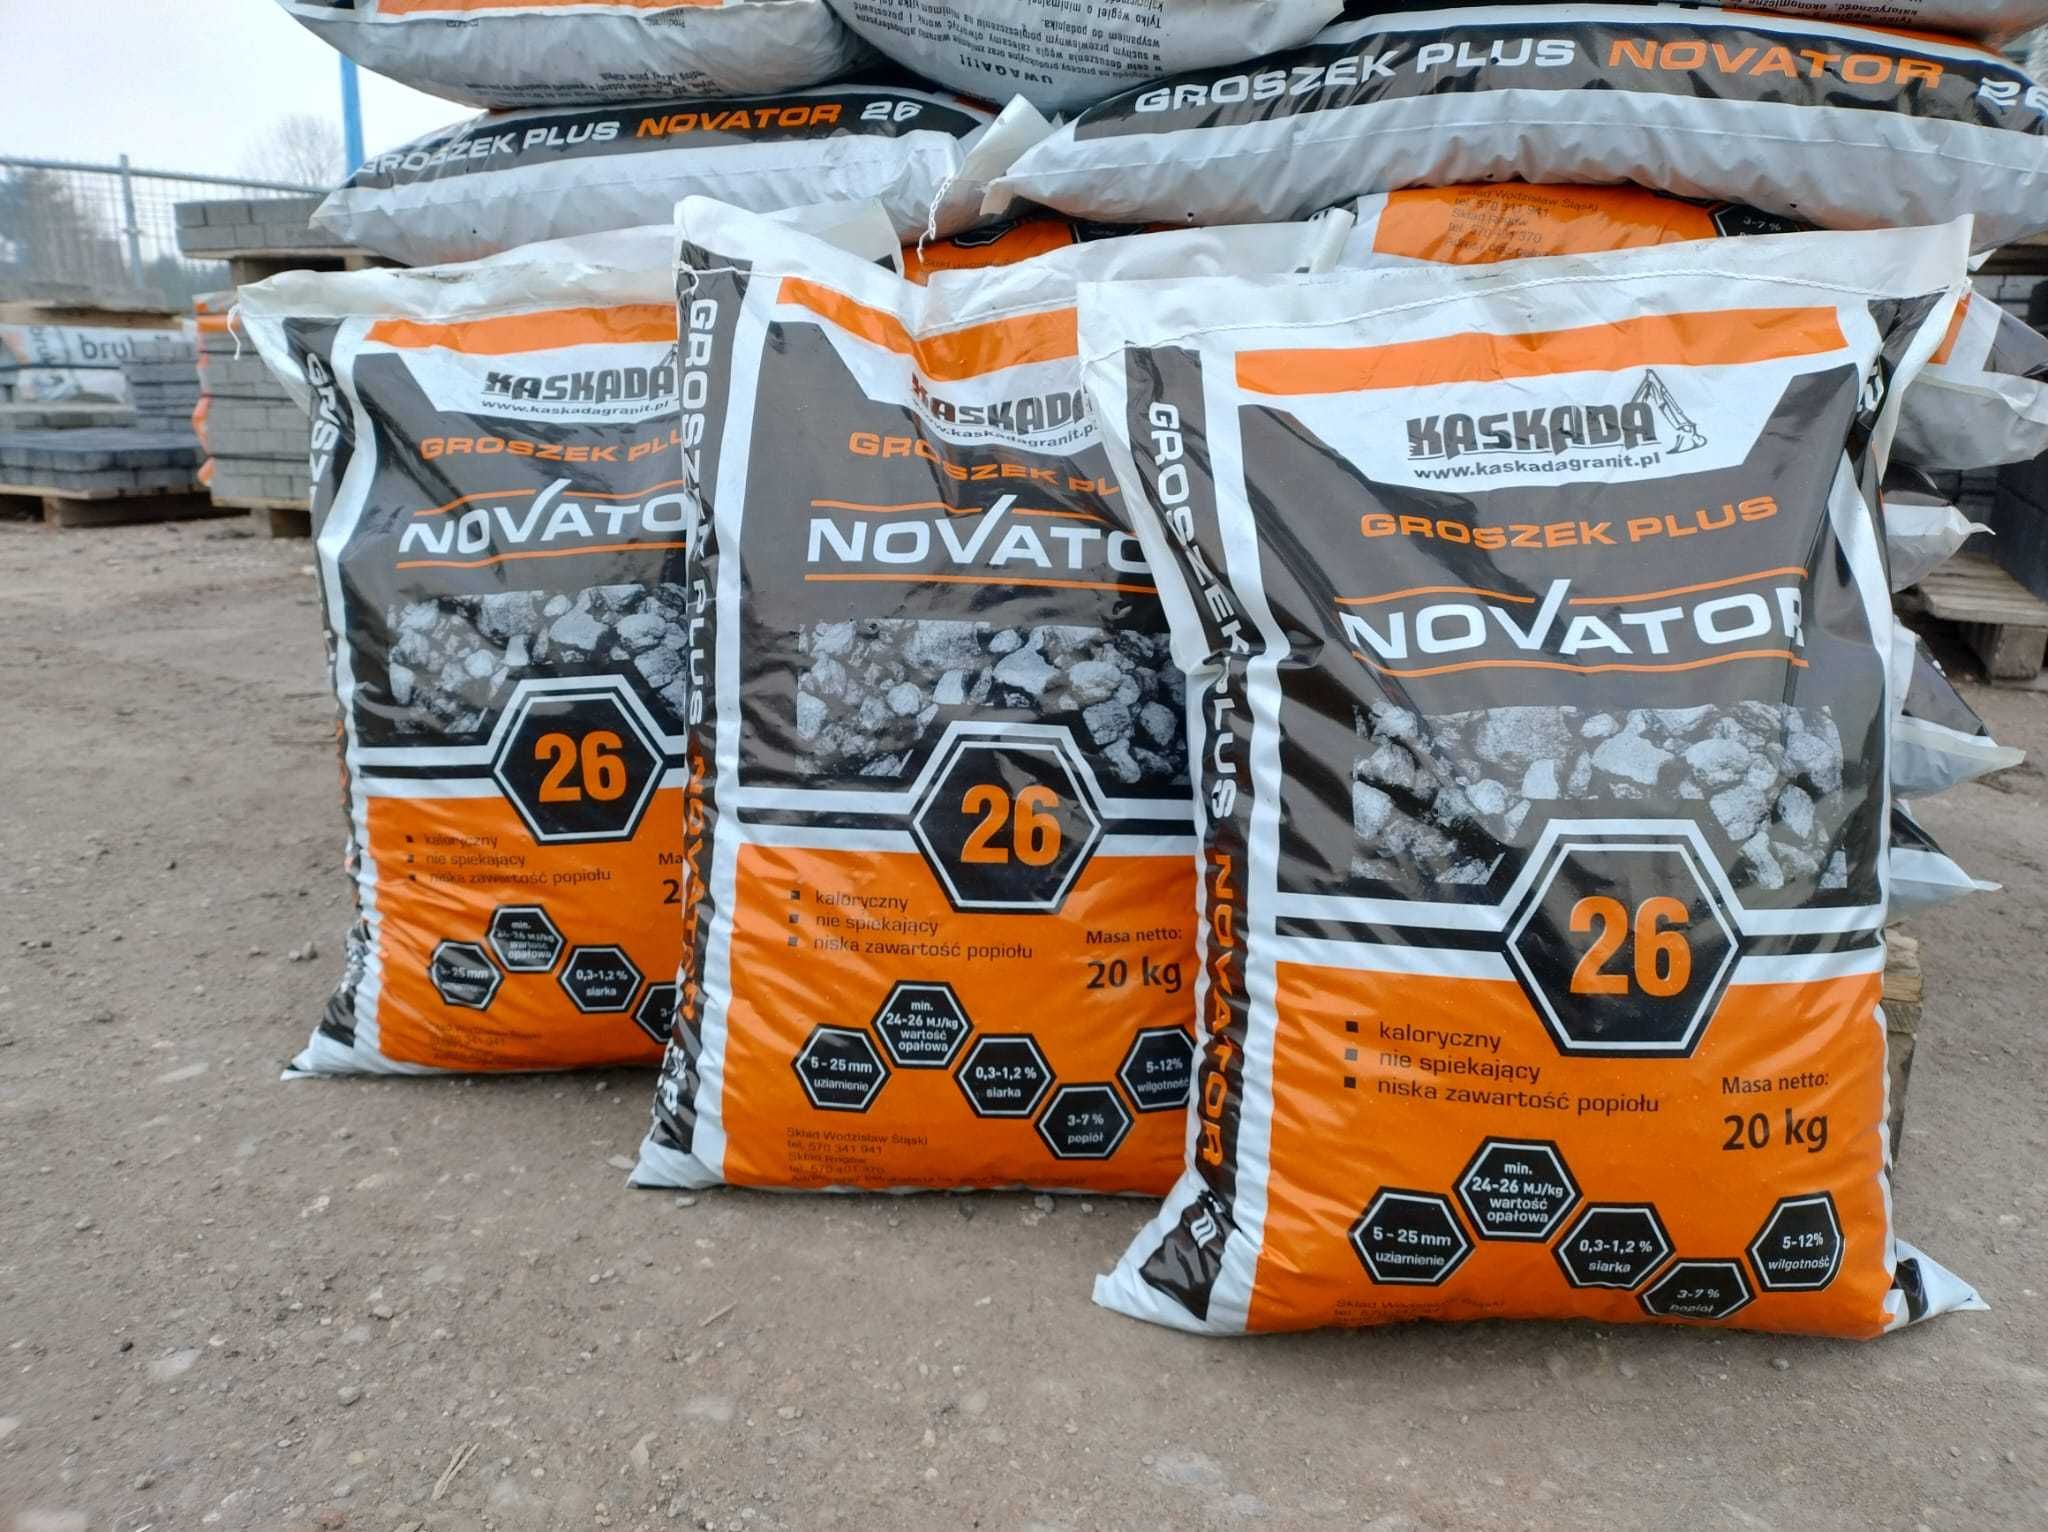 Ekogroszek NOVATOR dostawa GRATIS (od 2 ton) Węgiel eko groszek opał